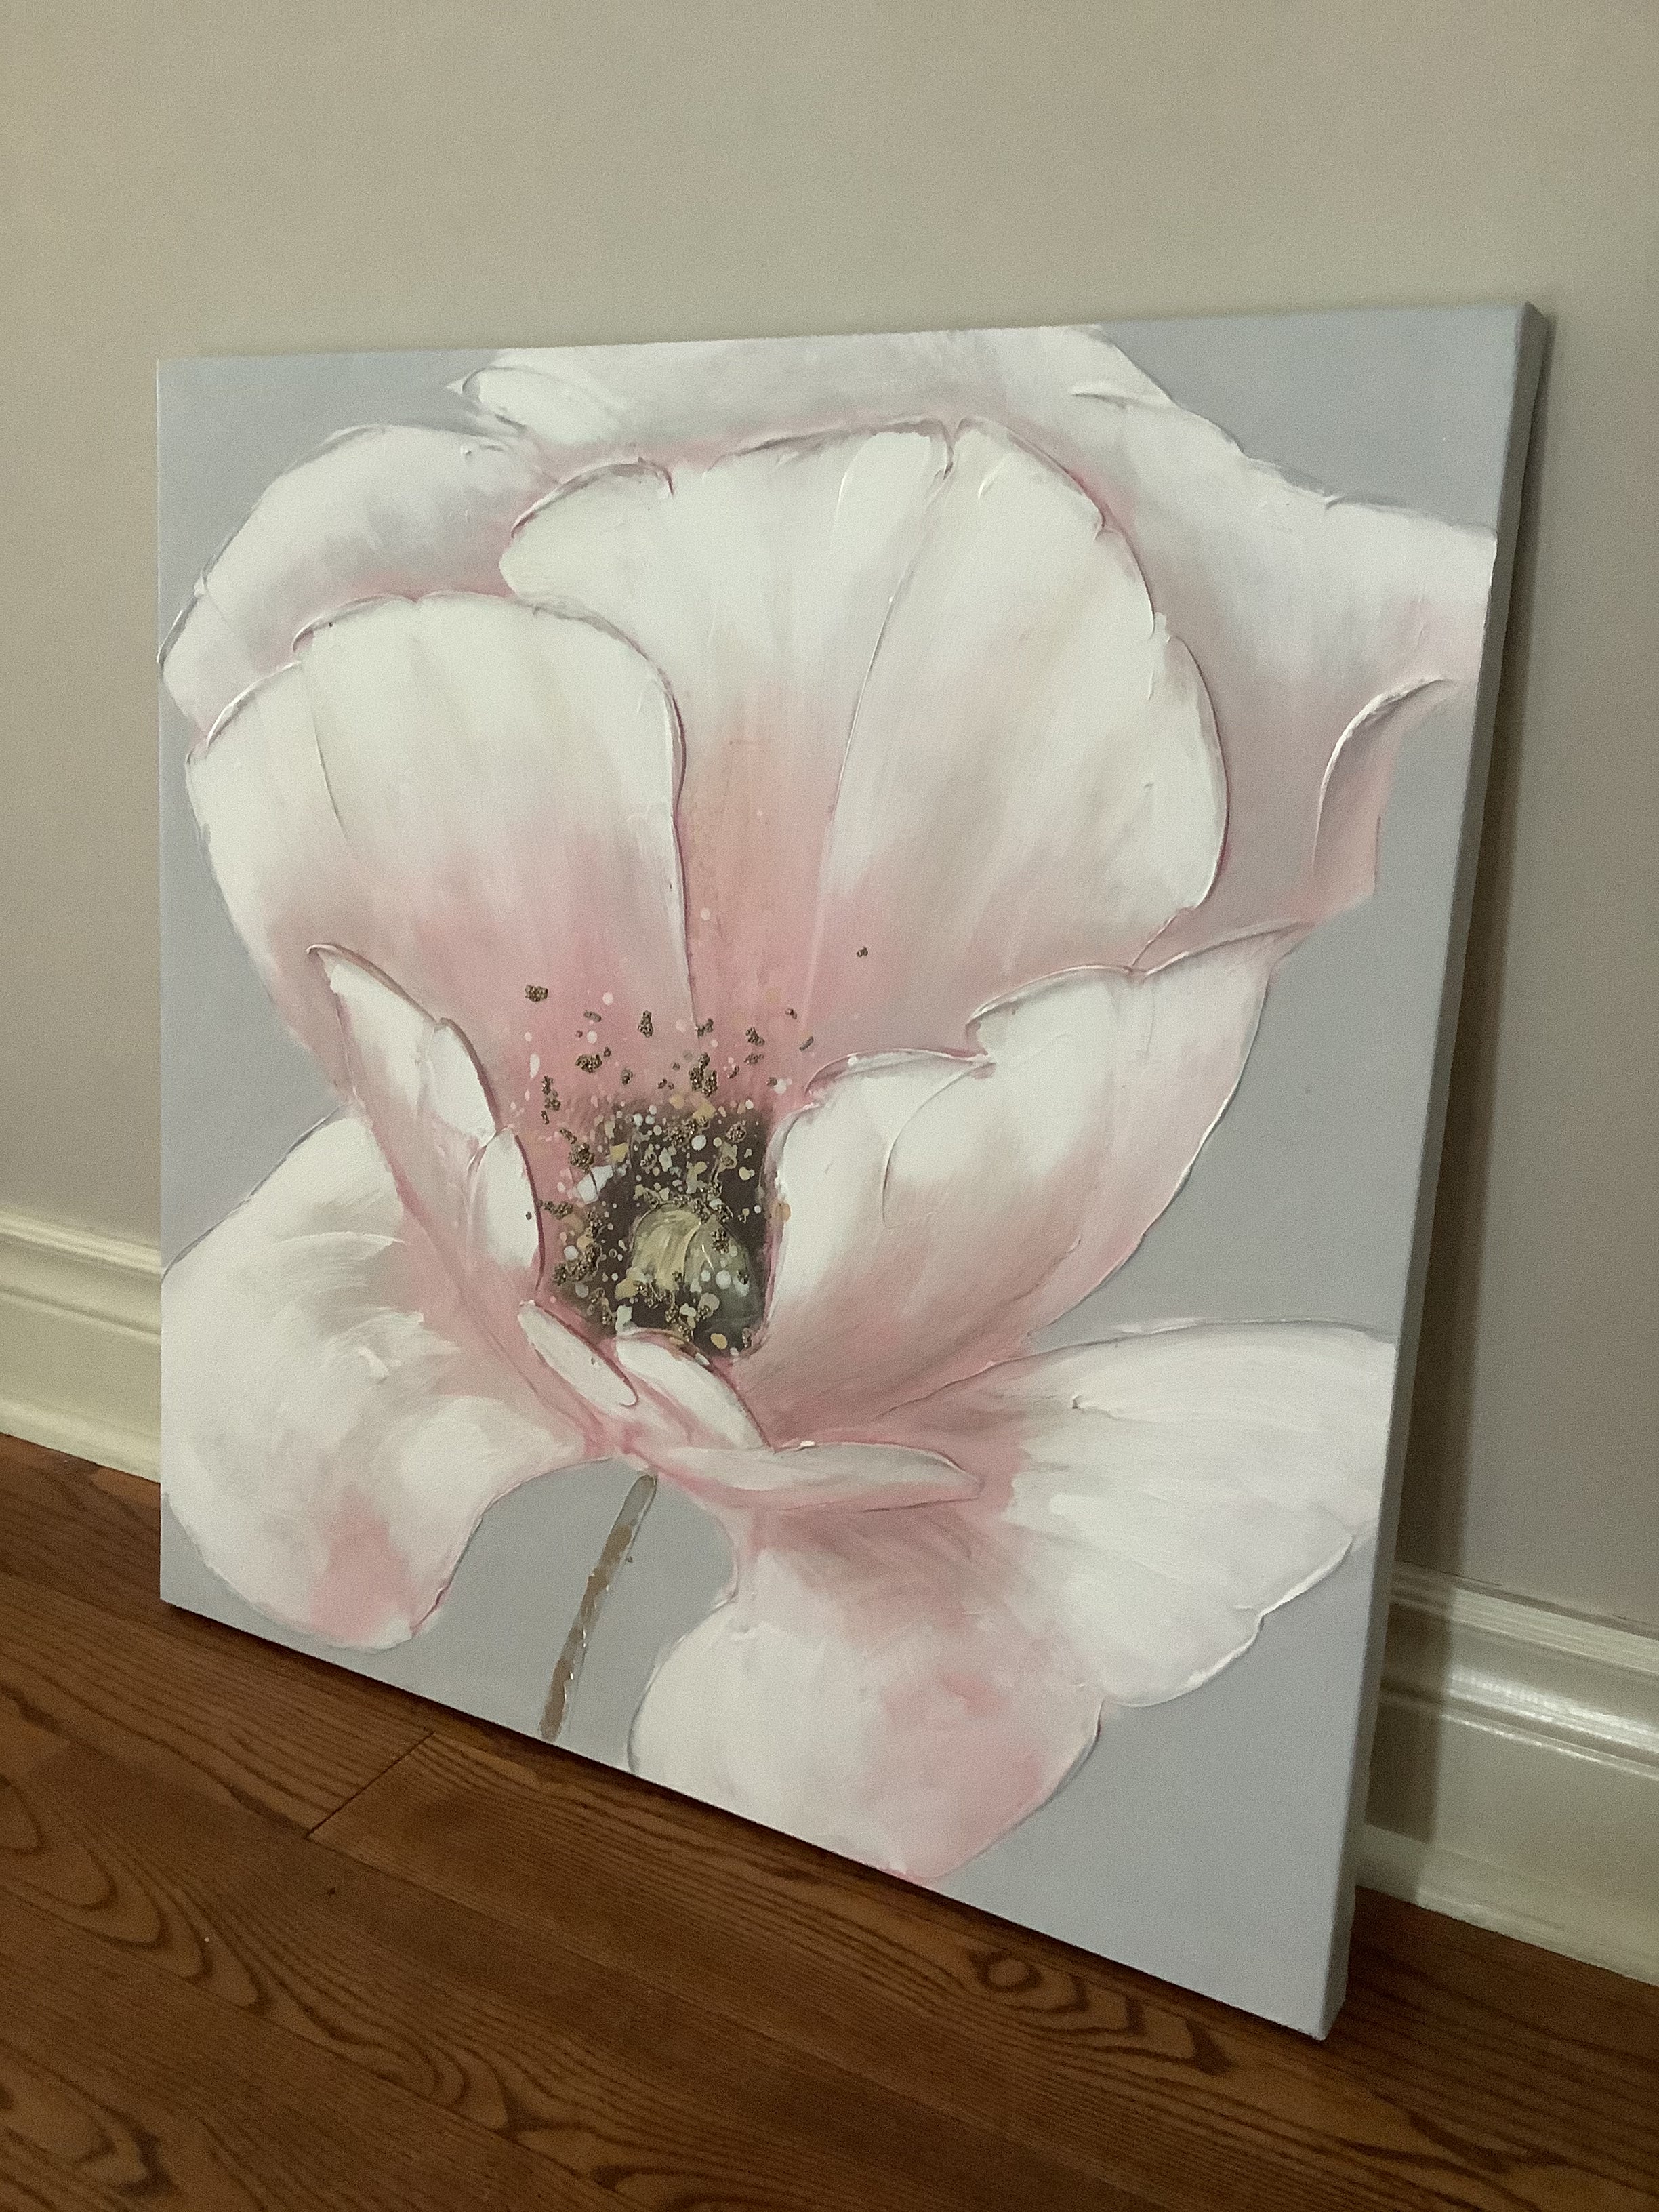 Pink Floral Canvas Print